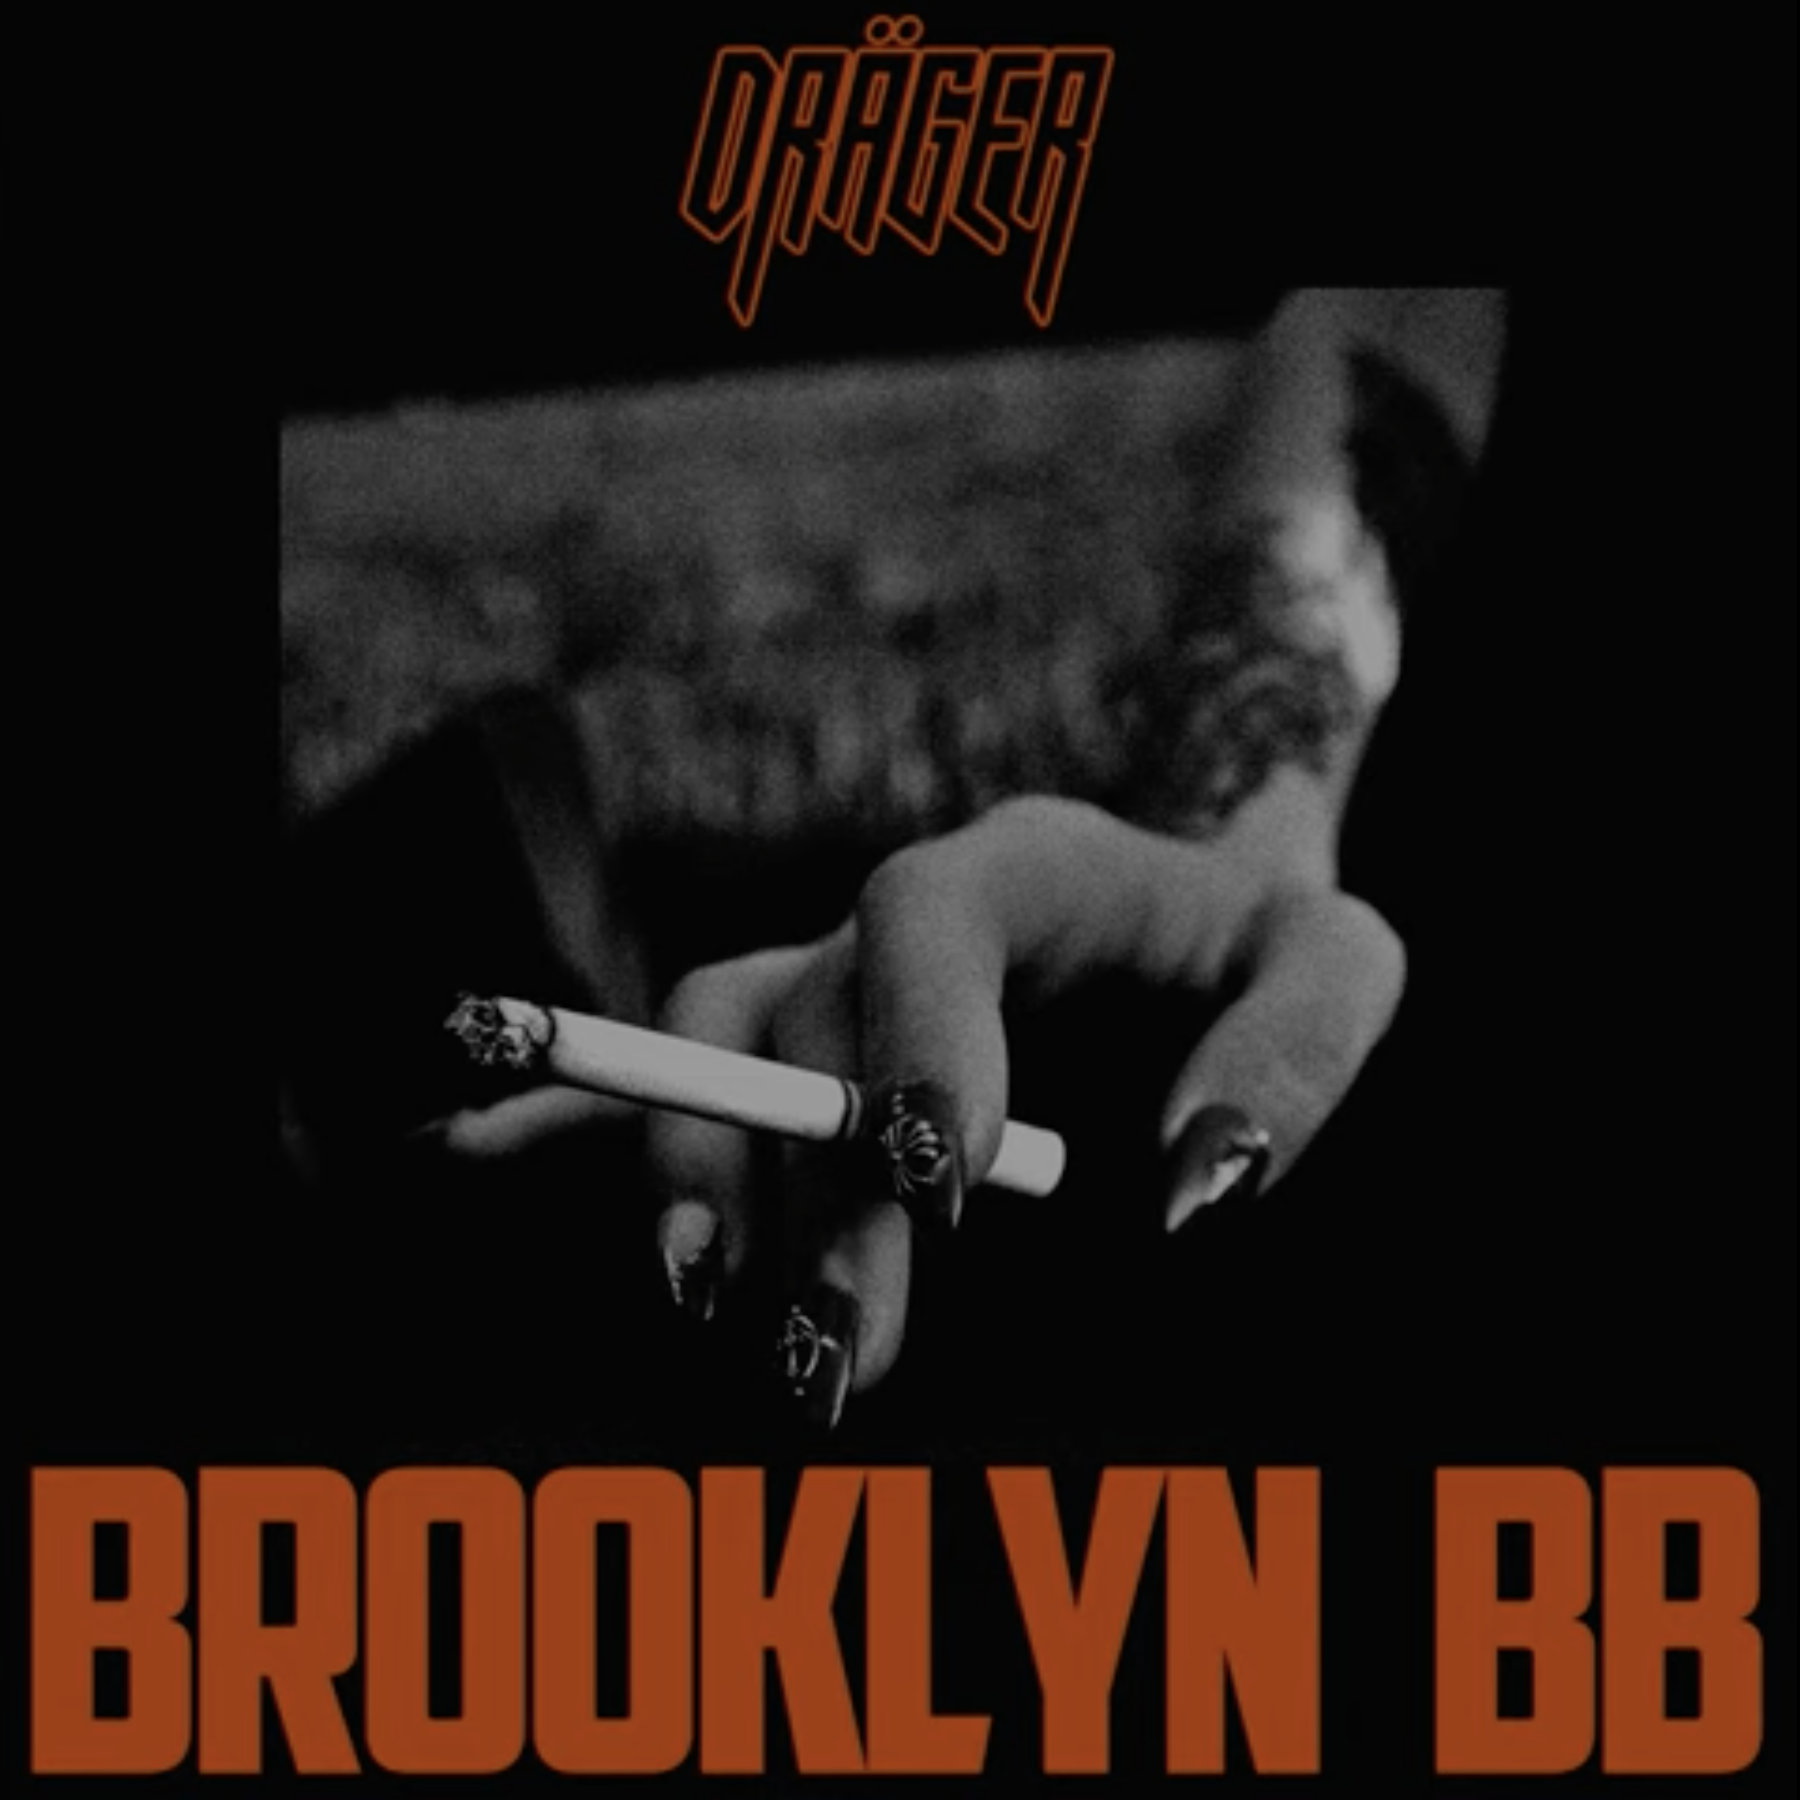 LISTEN: “Brooklyn BB” by Dräger